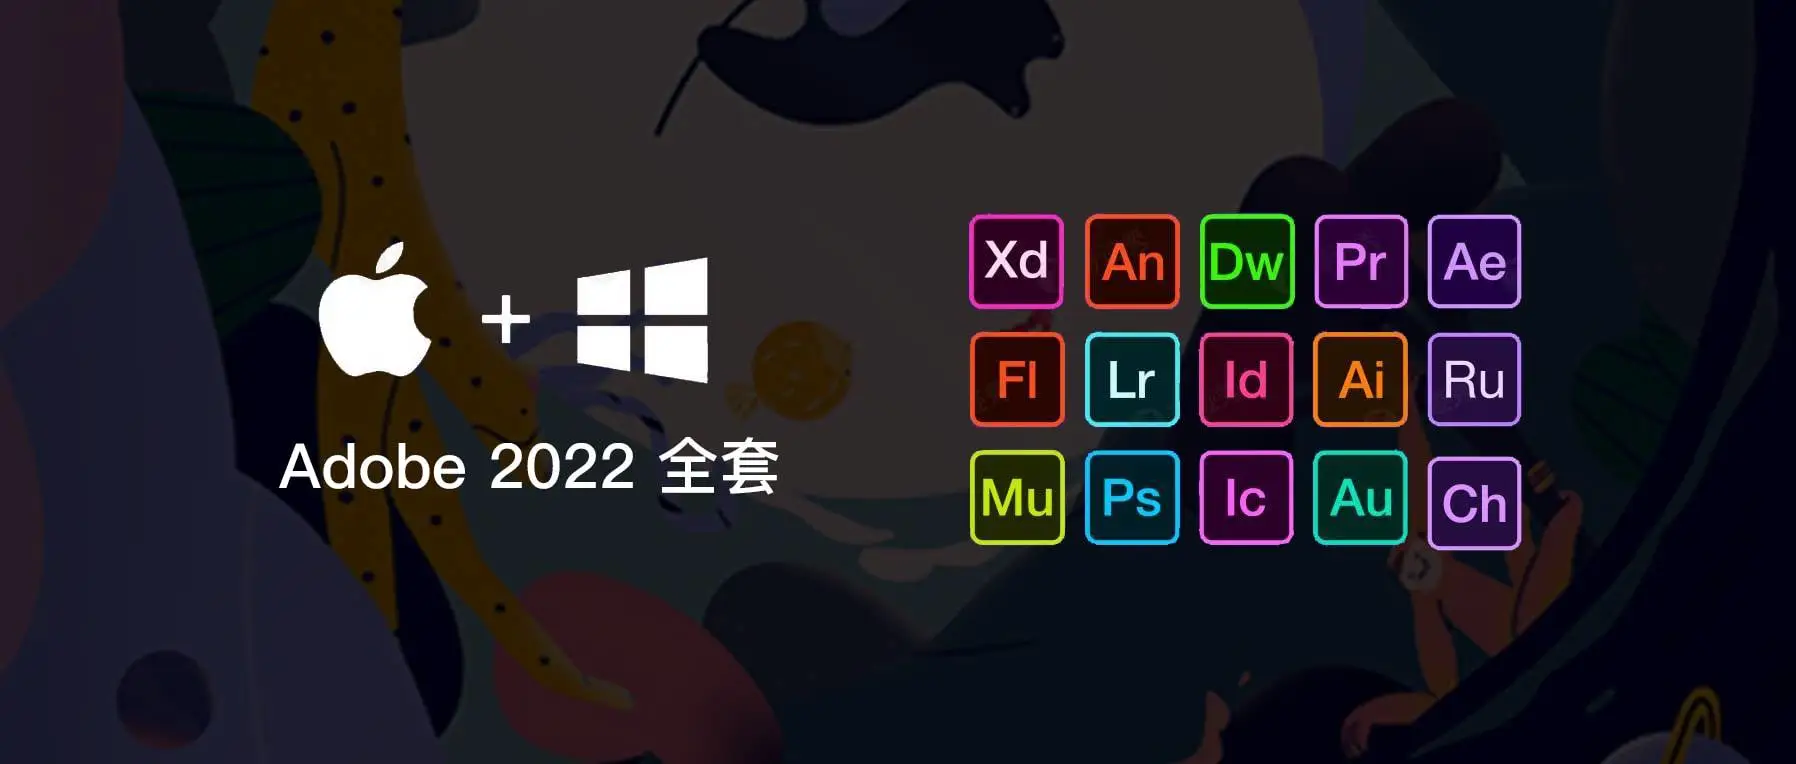 Adobe CC 2022整套-嗨皮网-Hpeak.net